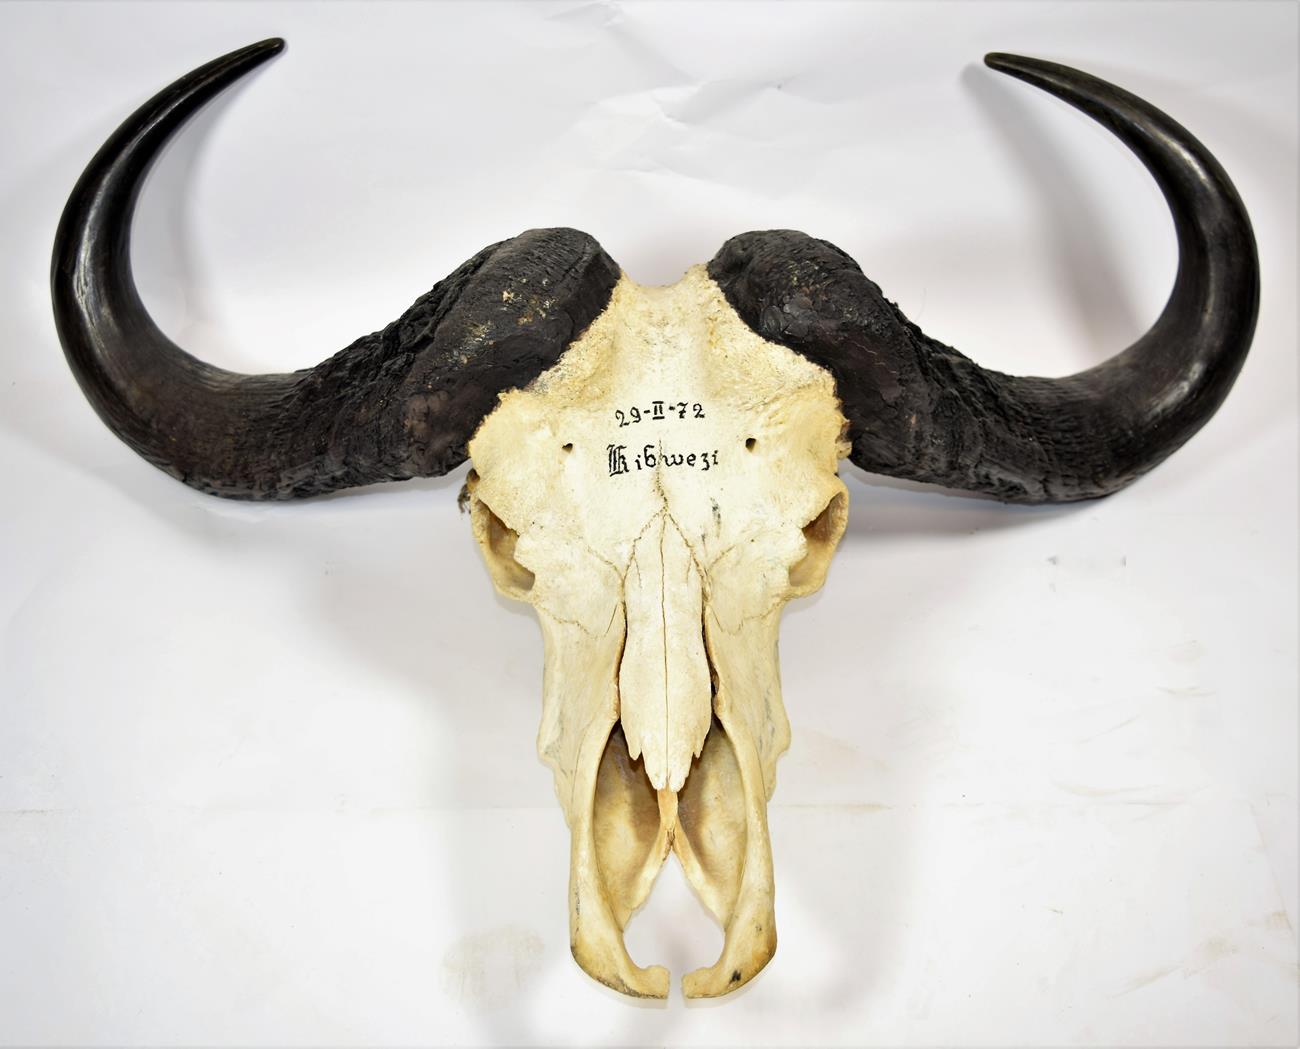 Lot 2170 - Skulls/Horns: Cape Buffalo Skull (Syncerus caffer caffer), circa 1972, Kenya, East Africa, prepared